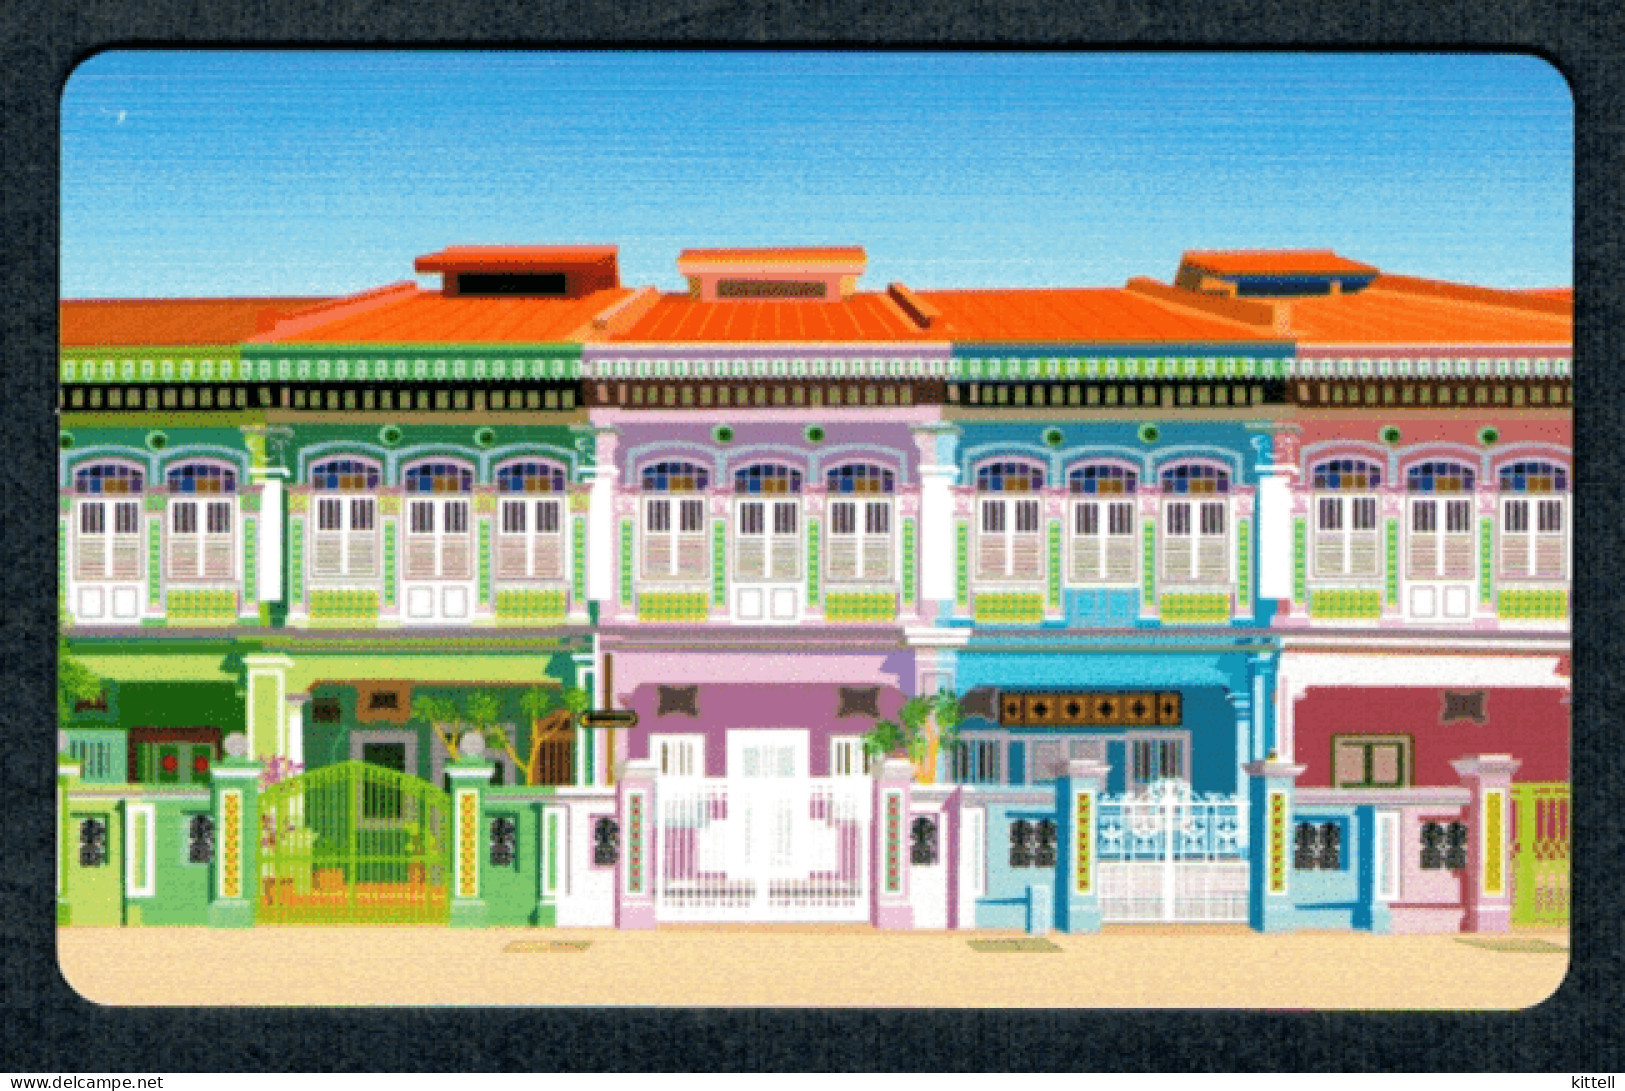 Singapore Travel Card Subway Train Bus Ticket Ezlink Unused Heritage Houses - Wereld